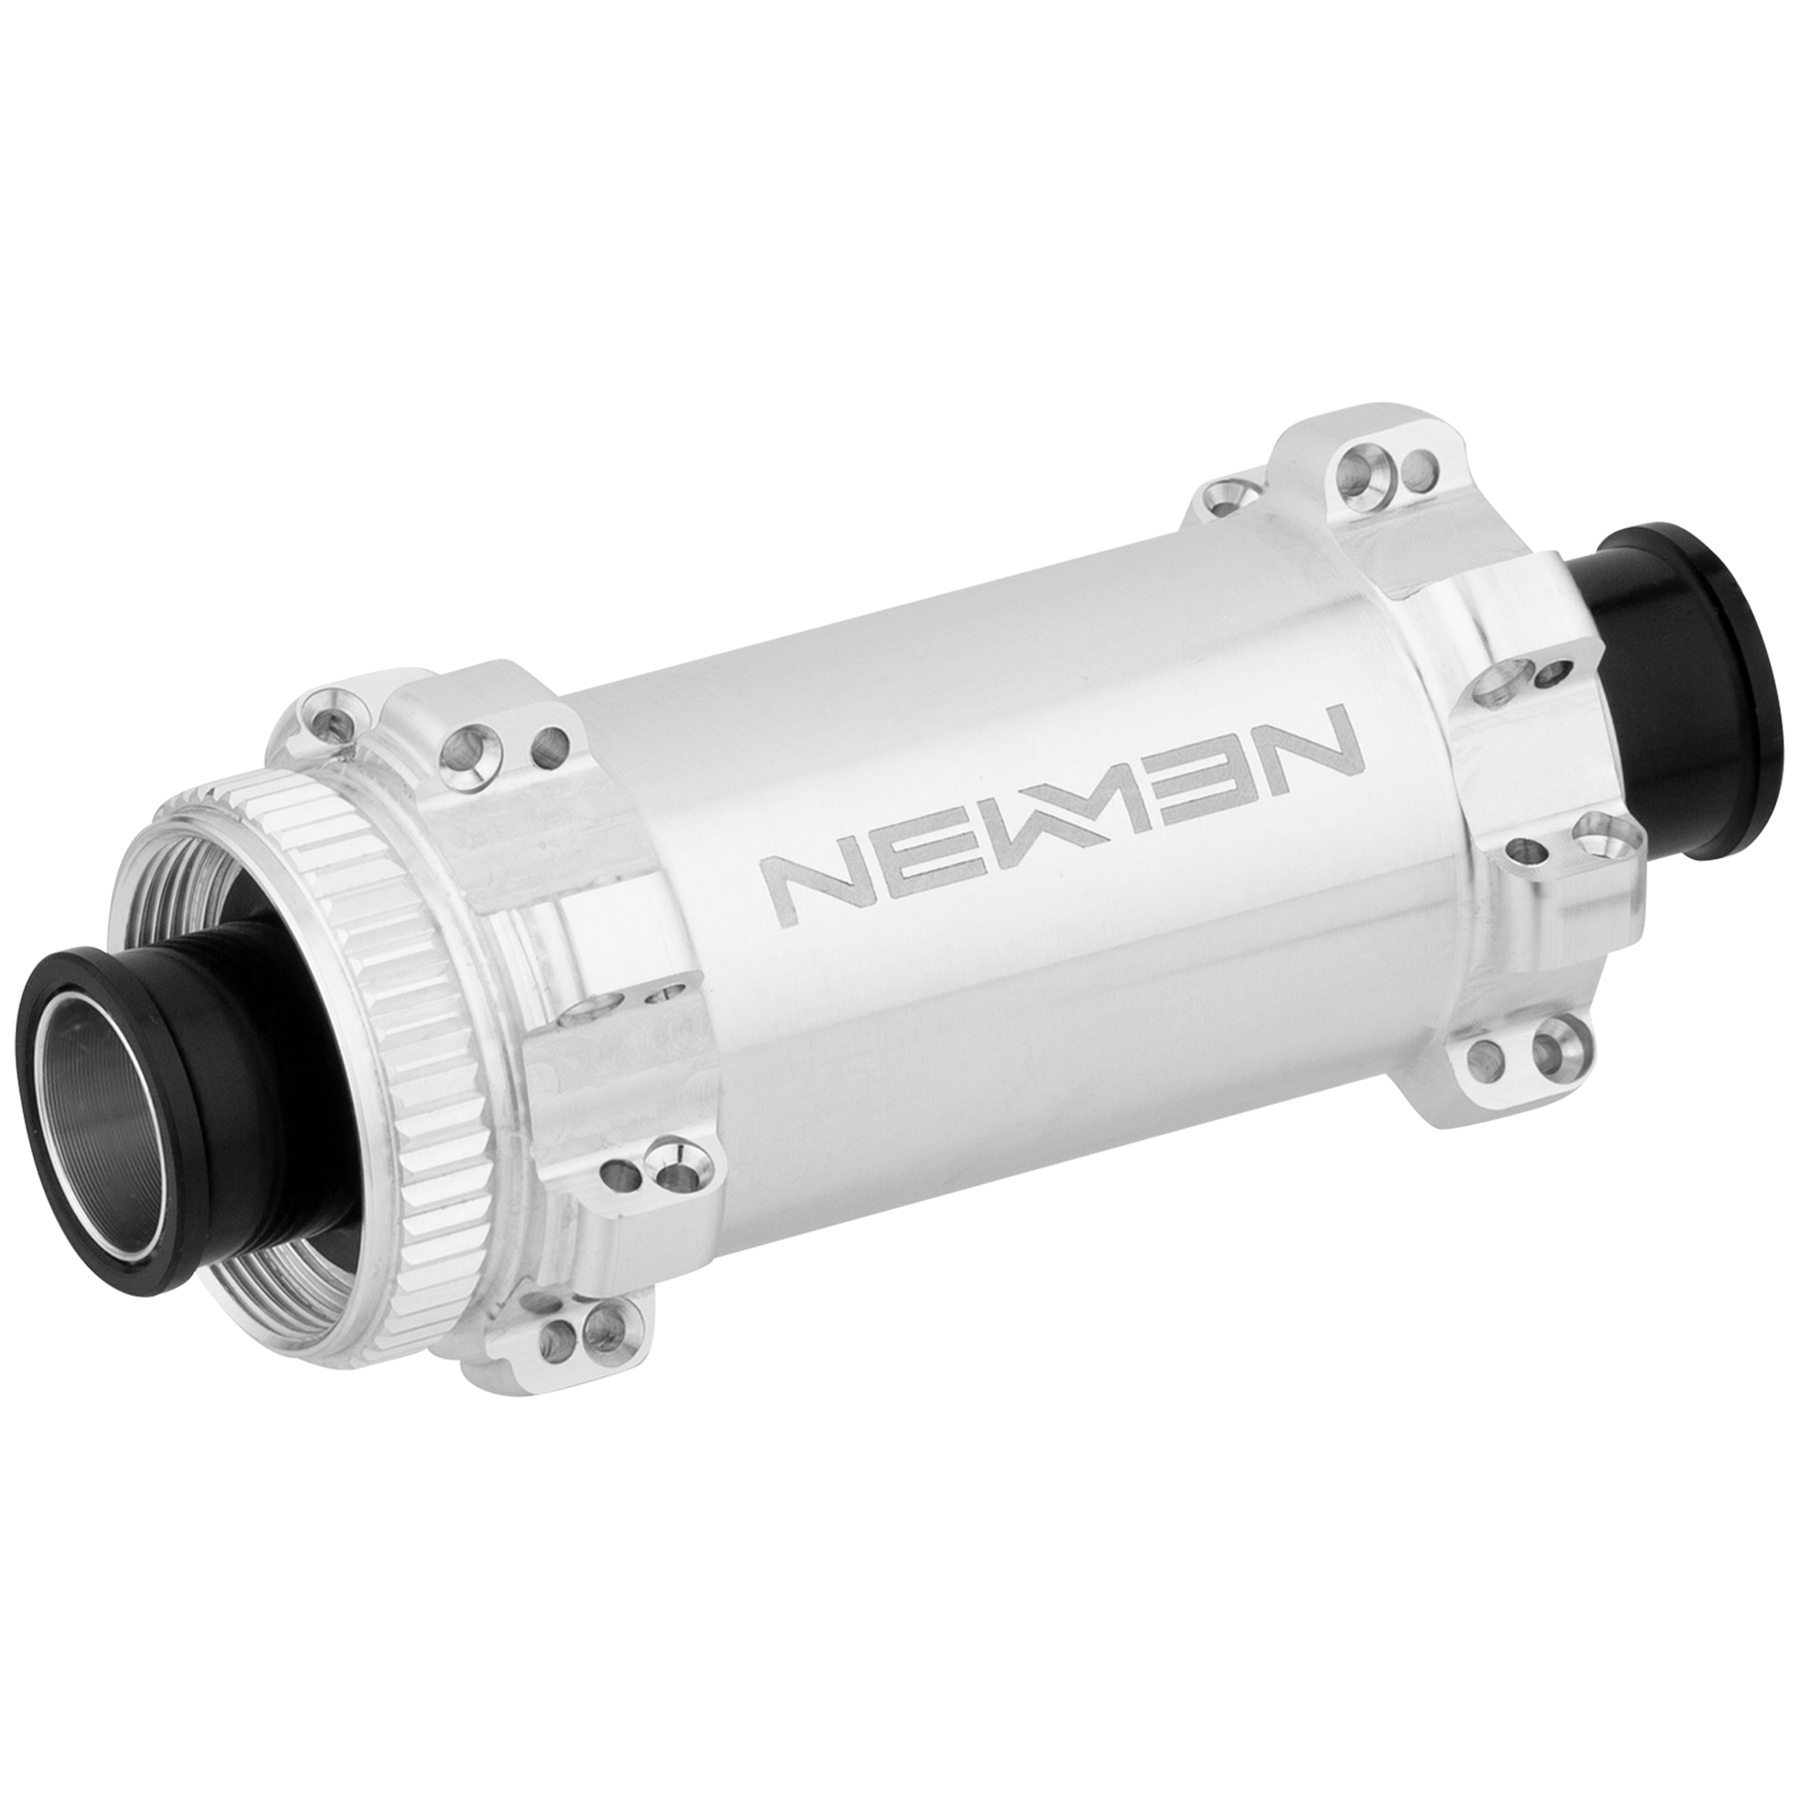 Productfoto van Newmen FADE Front Hub - Straightpull - Centerlock - 15x110mm